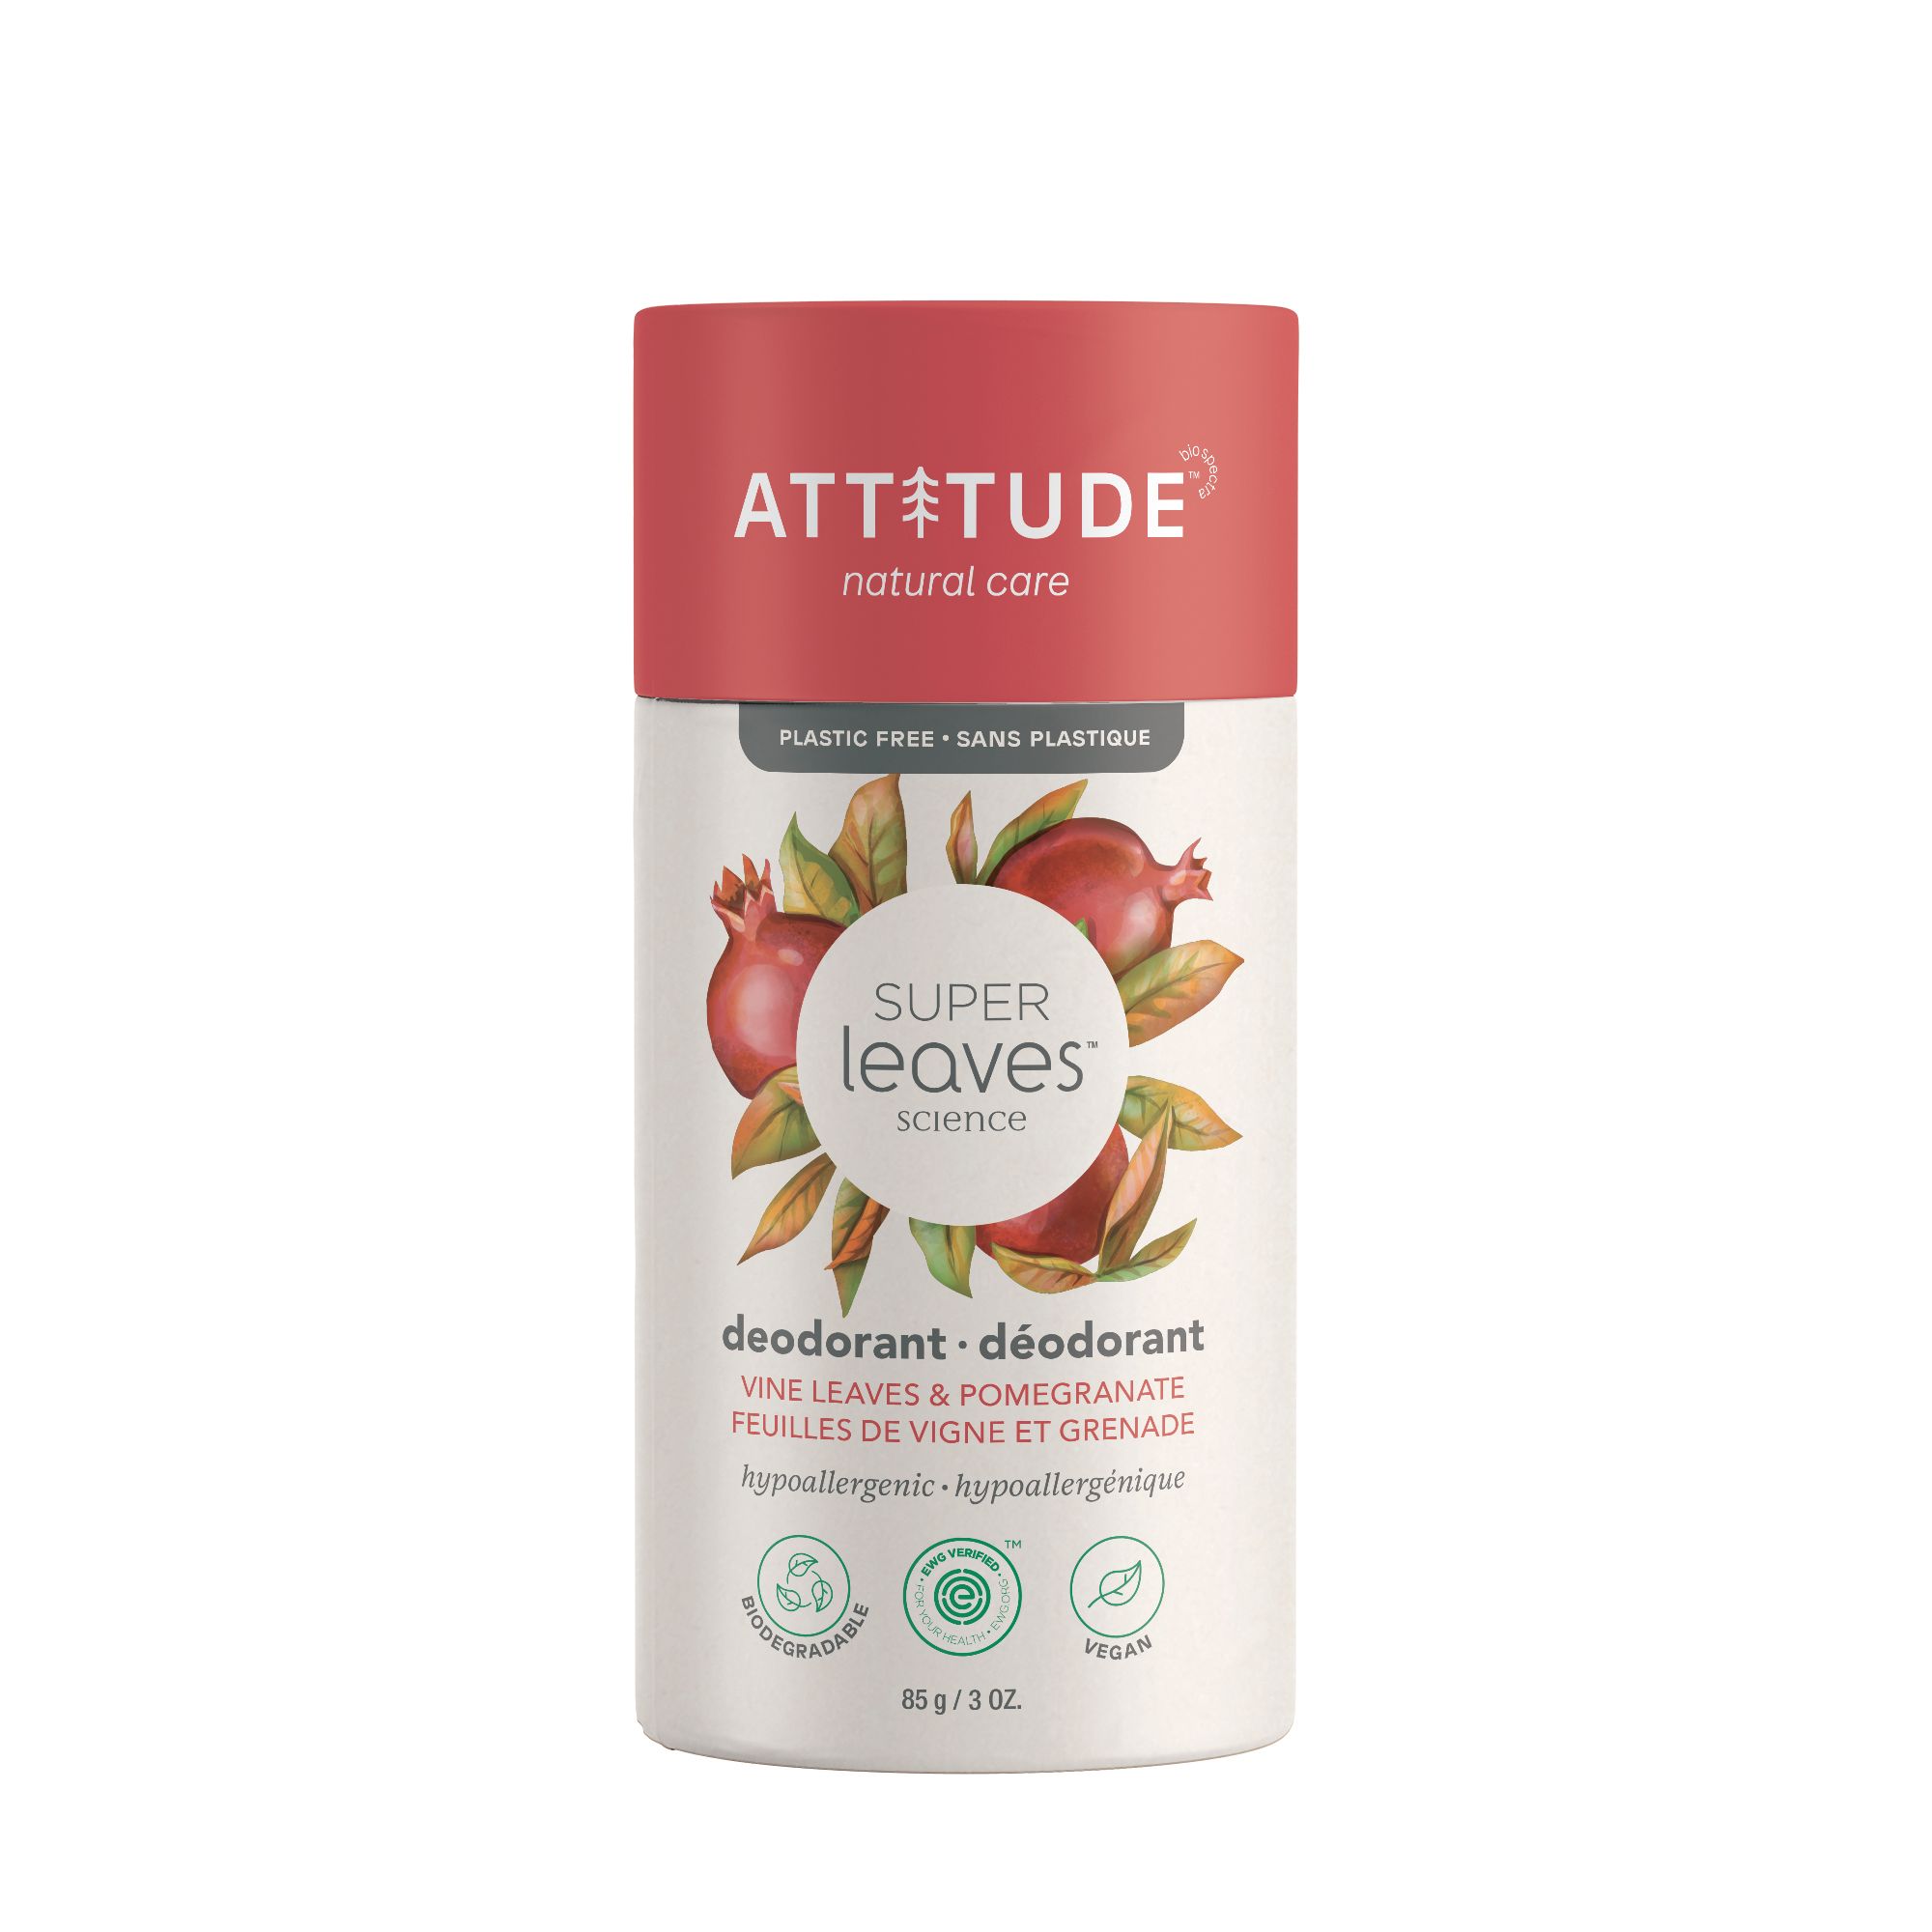 ATTITUDE Super Leaves Plastic Free Deodorant, Vine Leaves & Pomegranate